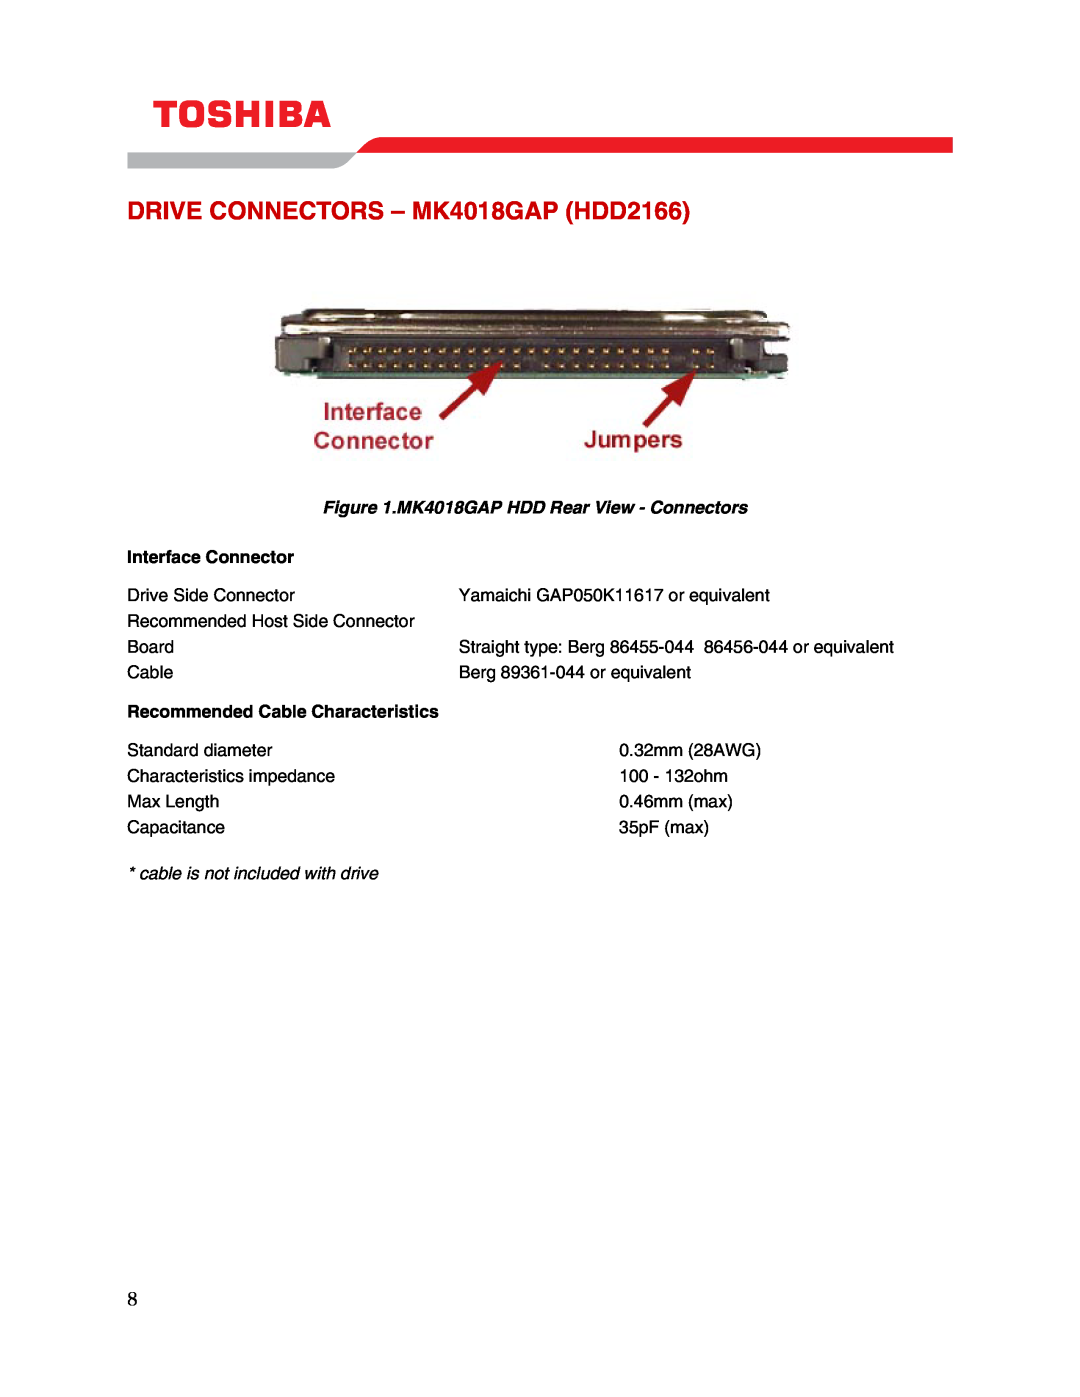 Toshiba user manual DRIVE CONNECTORS - MK4018GAP HDD2166, MK4018GAP HDD Rear View - Connectors, Interface Connector 